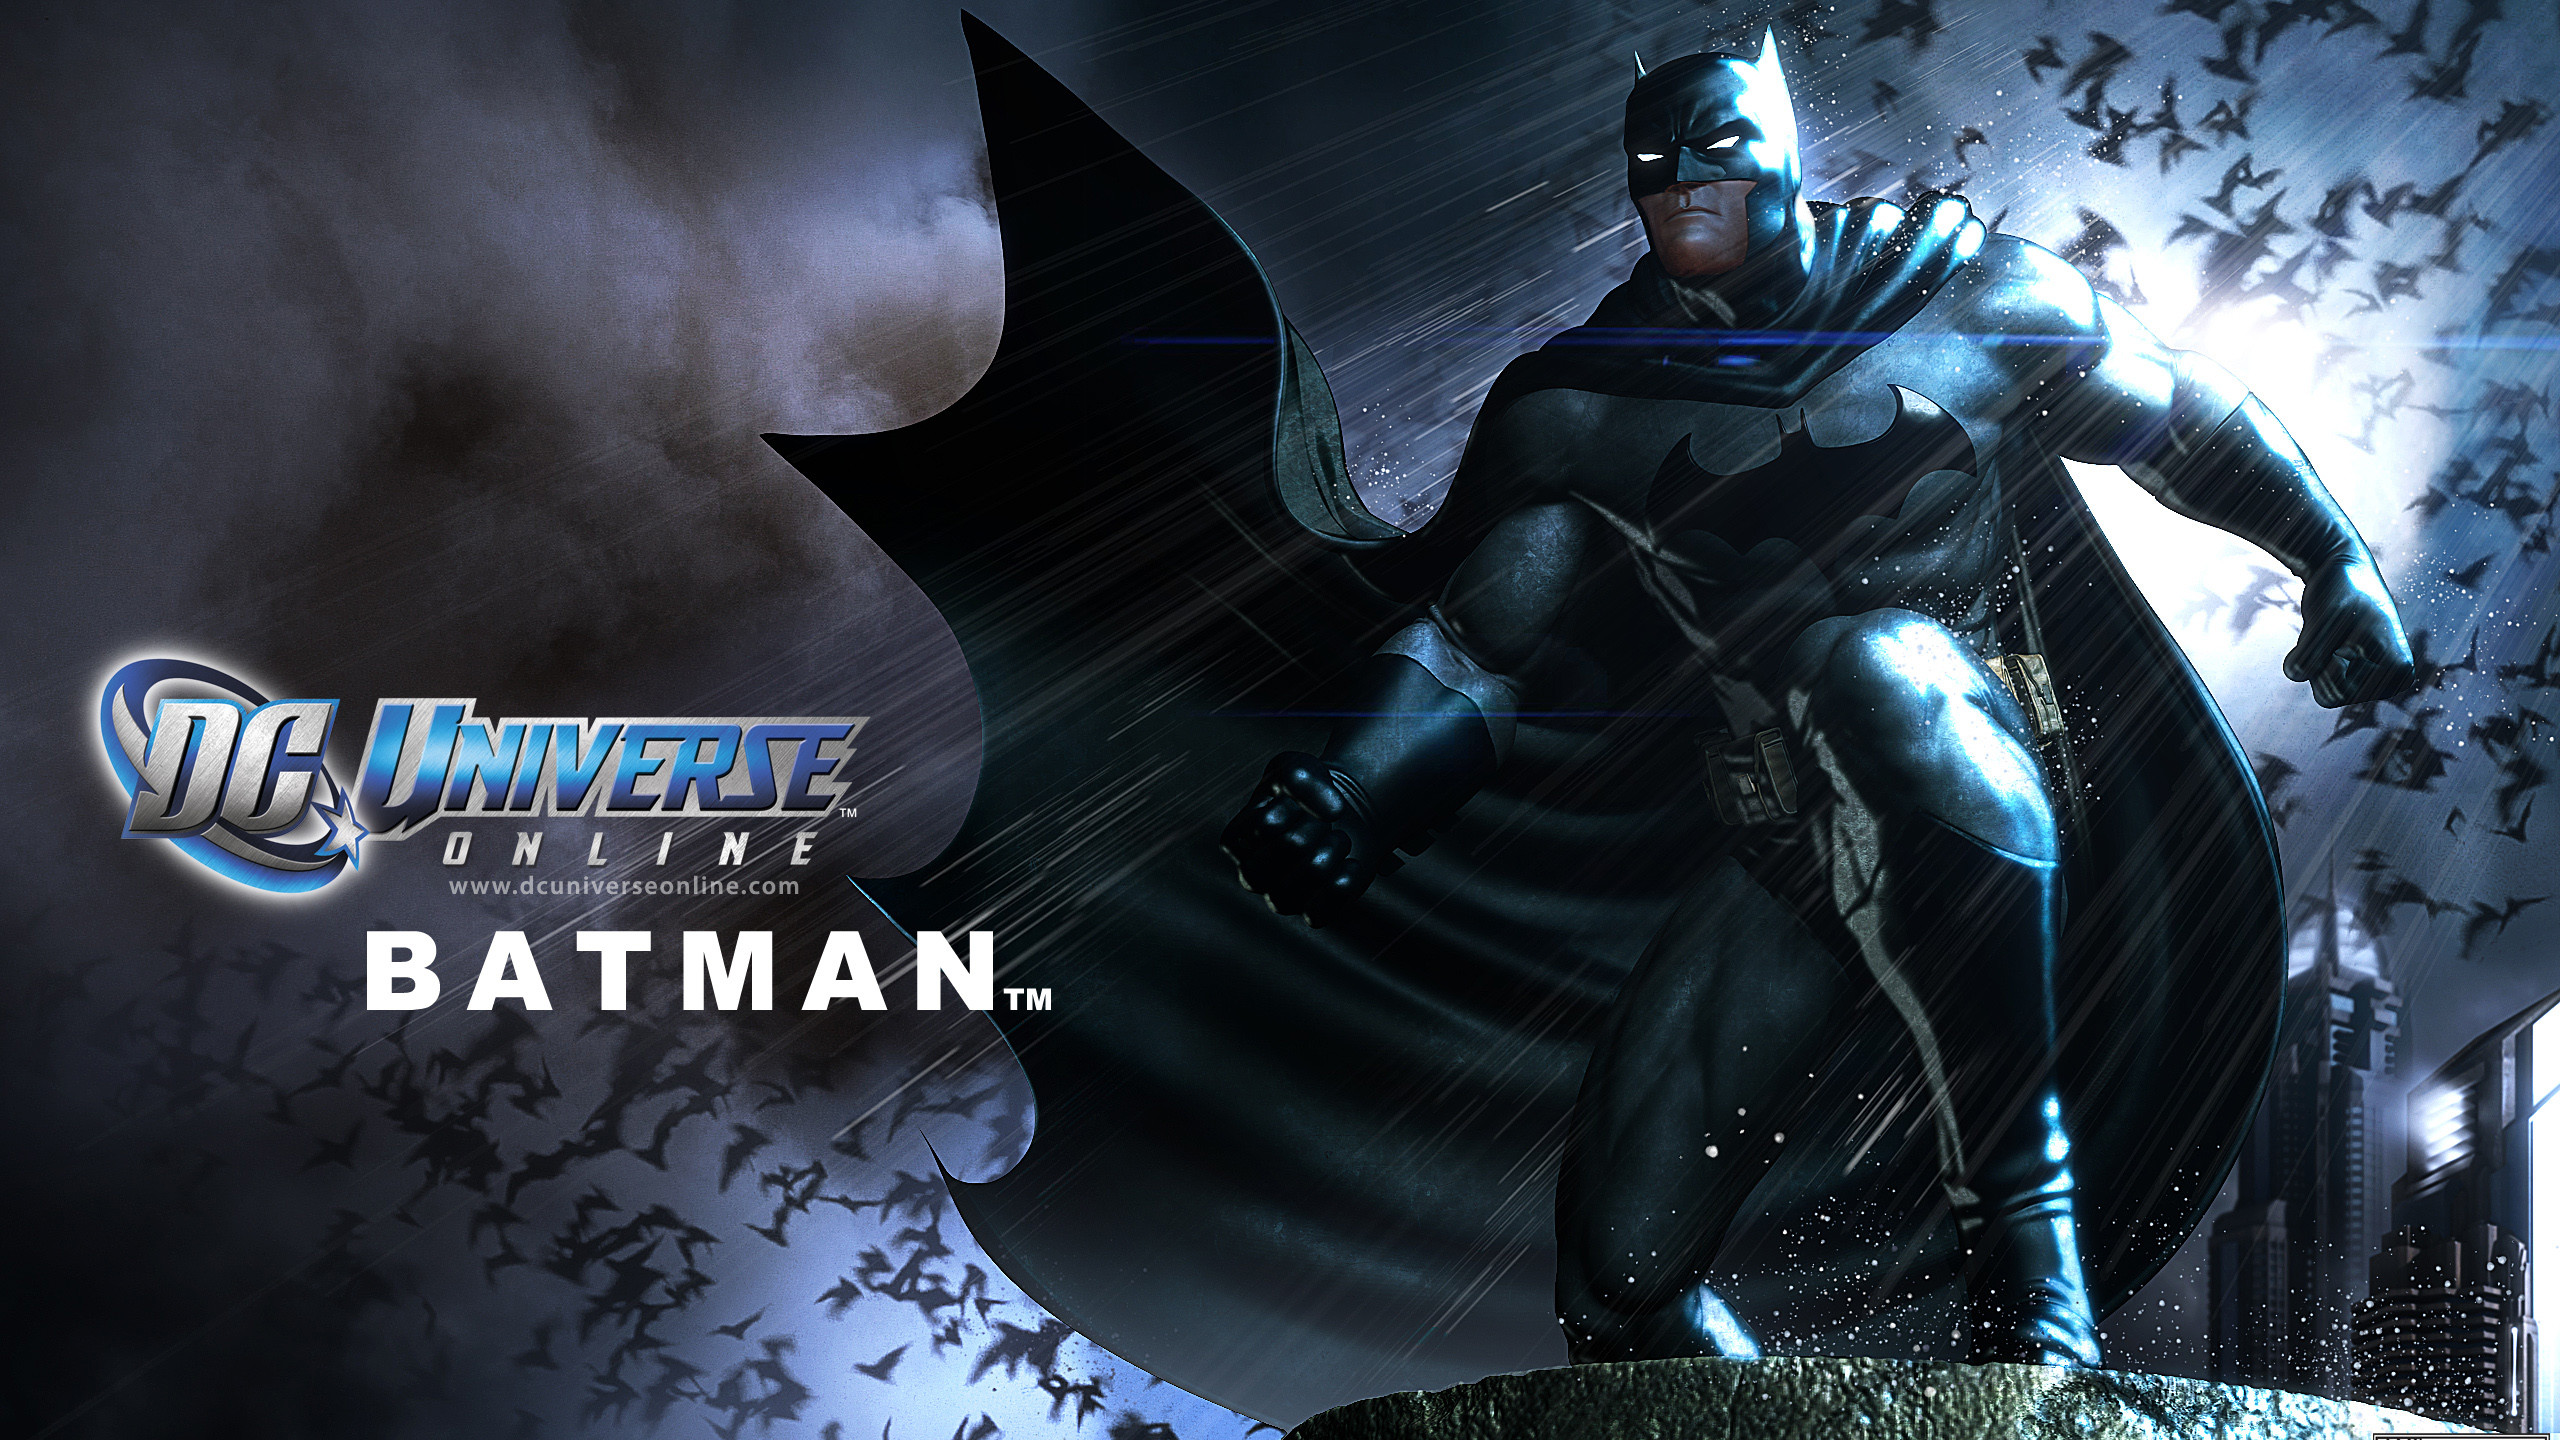 Batman In Dc Universe Online 2560x1440